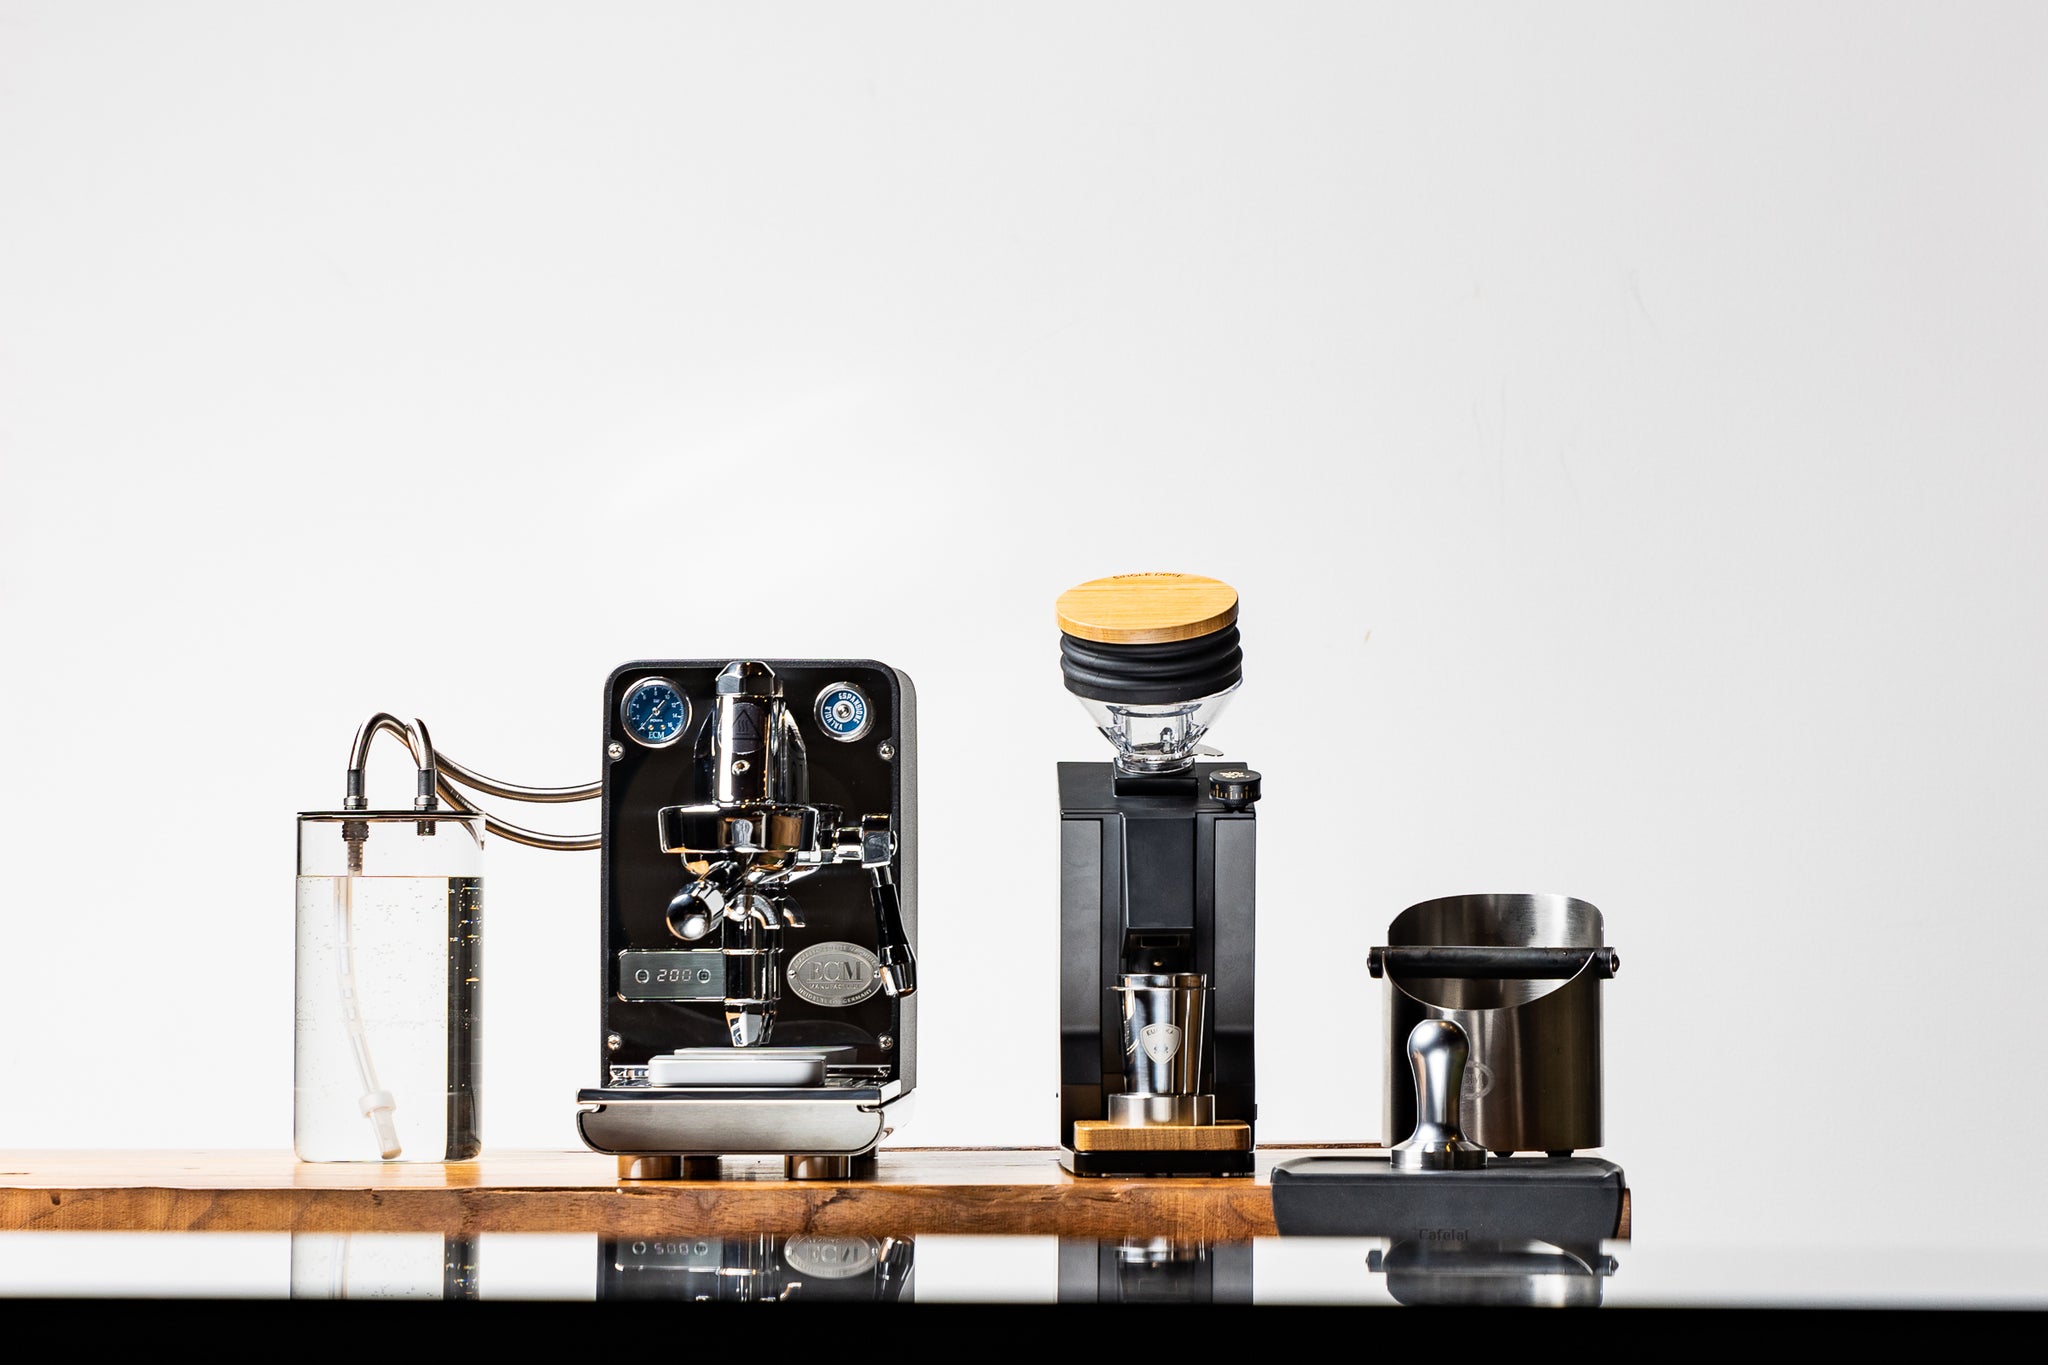 ECM Puristika single boiler espresso machine with the Eureka Oro Mignon Single Dose grinder and ECM knock box